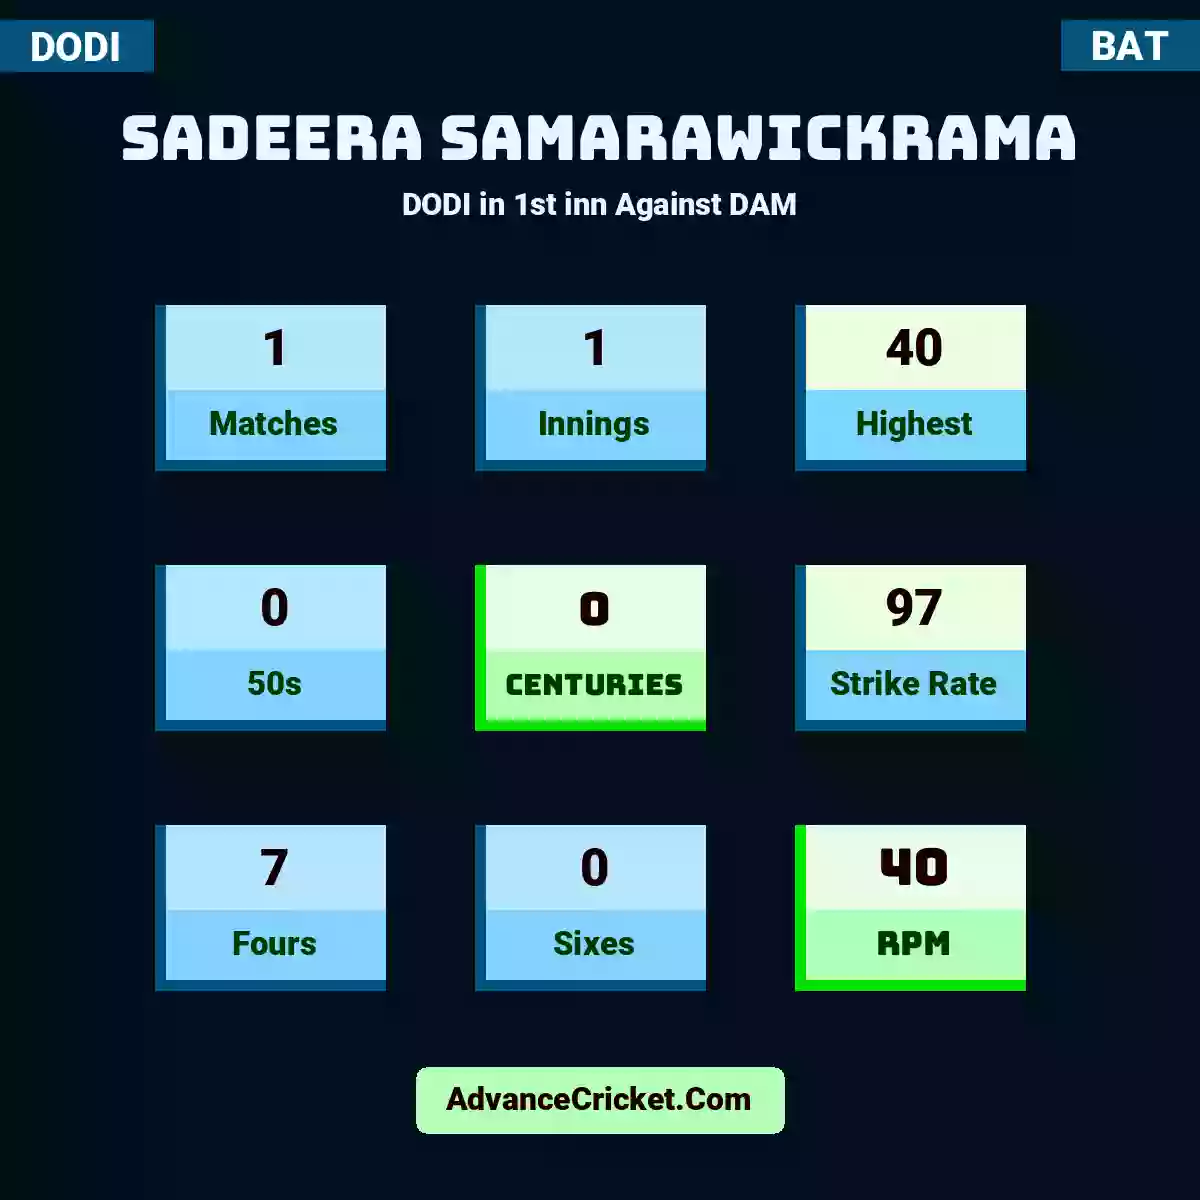 Sadeera Samarawickrama DODI  in 1st inn Against DAM, Sadeera Samarawickrama played 1 matches, scored 40 runs as highest, 0 half-centuries, and 0 centuries, with a strike rate of 97. S.Samarawickrama hit 7 fours and 0 sixes, with an RPM of 40.